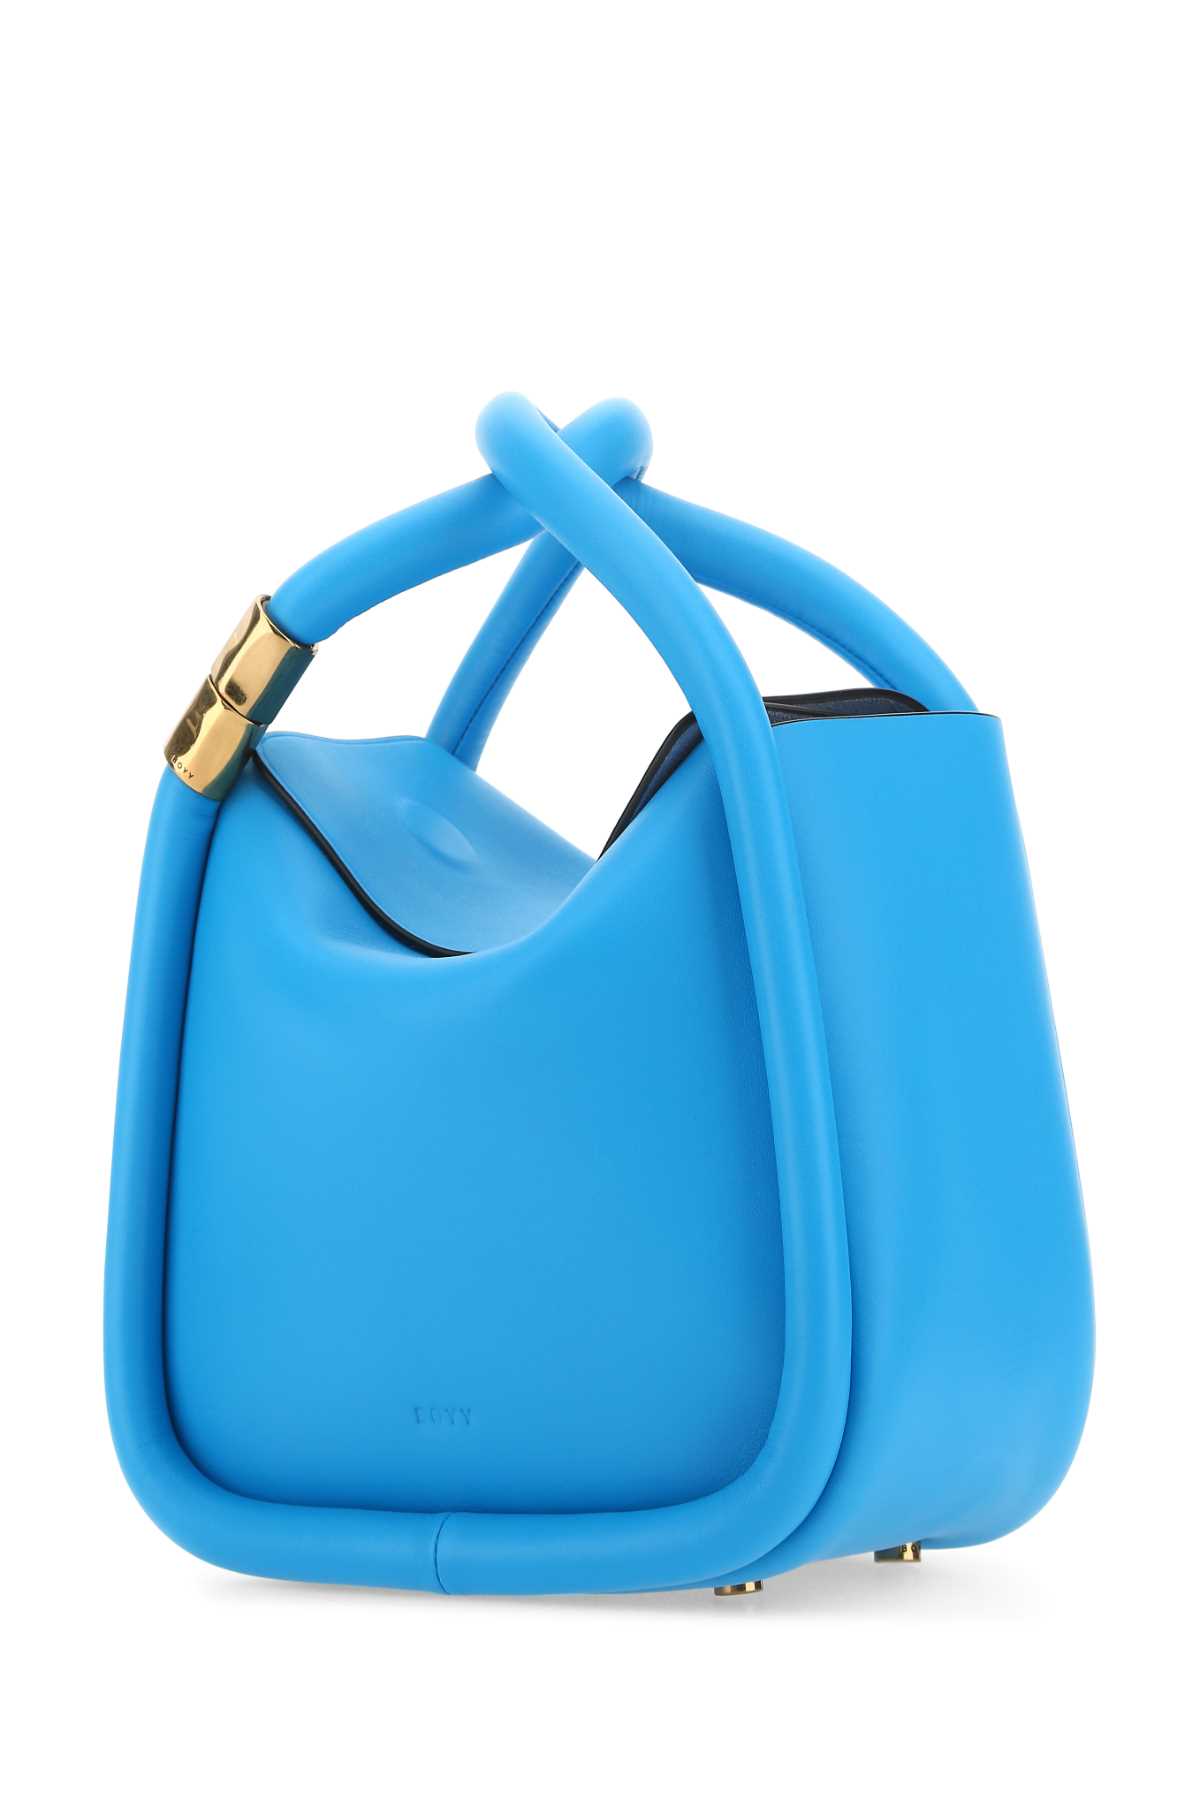 Boyy Light Blue Leather Wonton 25 Handbag In Hawaii